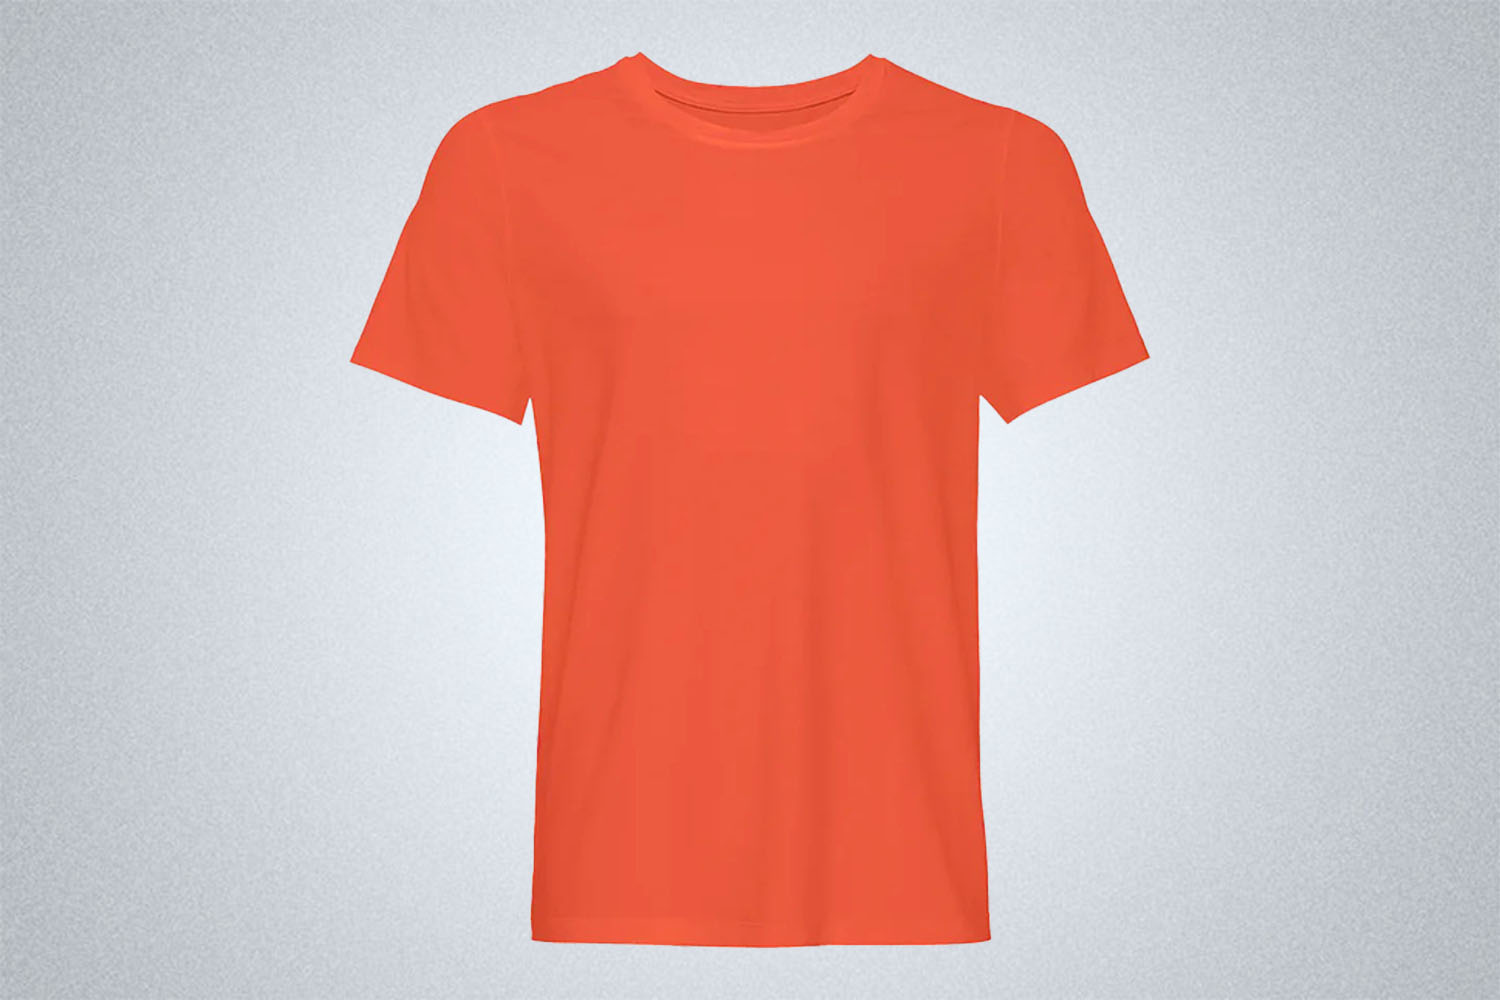 Pruzan Super Soft Marathon T-Shirt